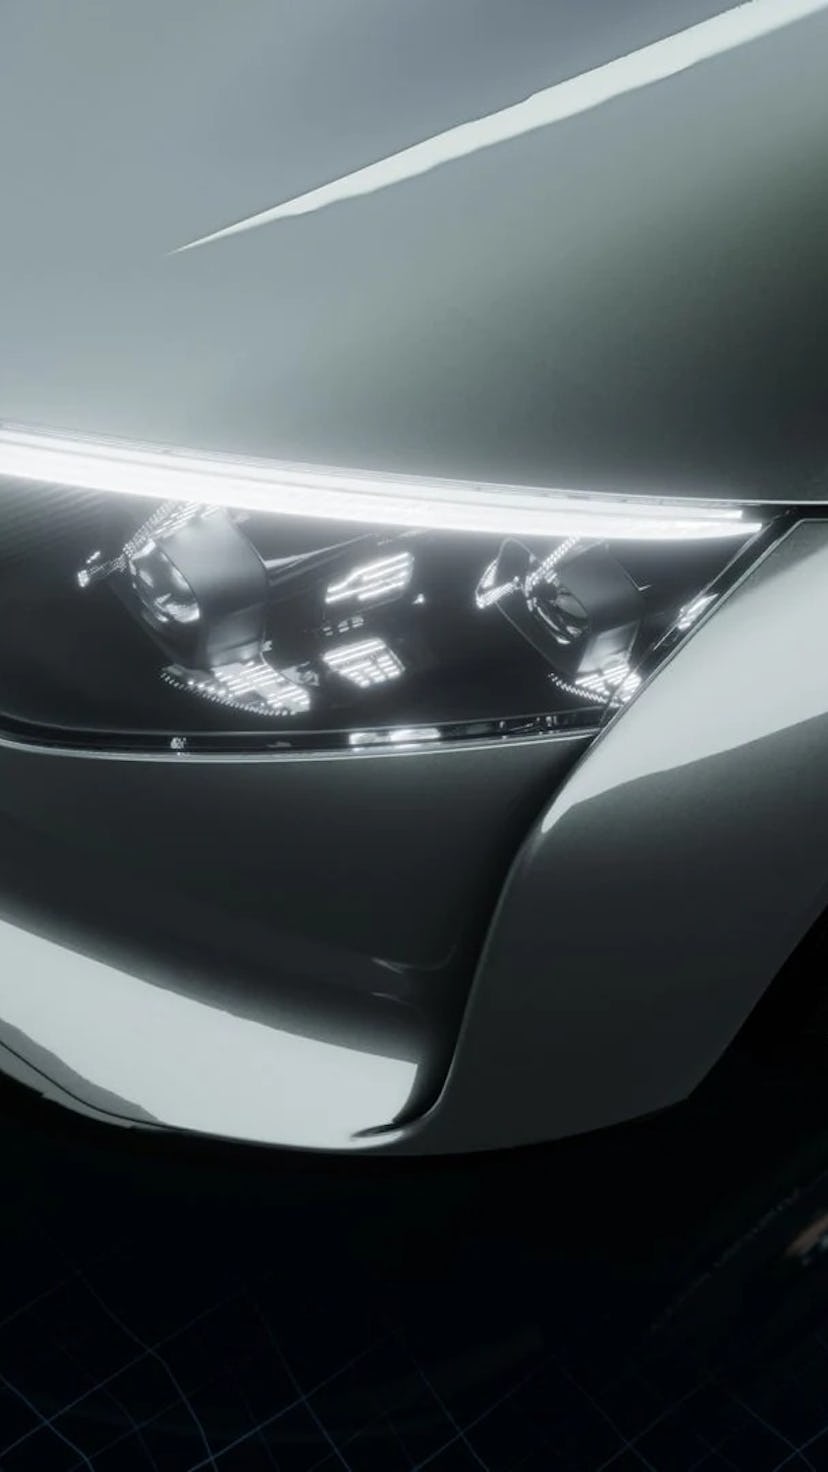 Mercedes-Benz electric vehicle Vision EQXX concept rendering.